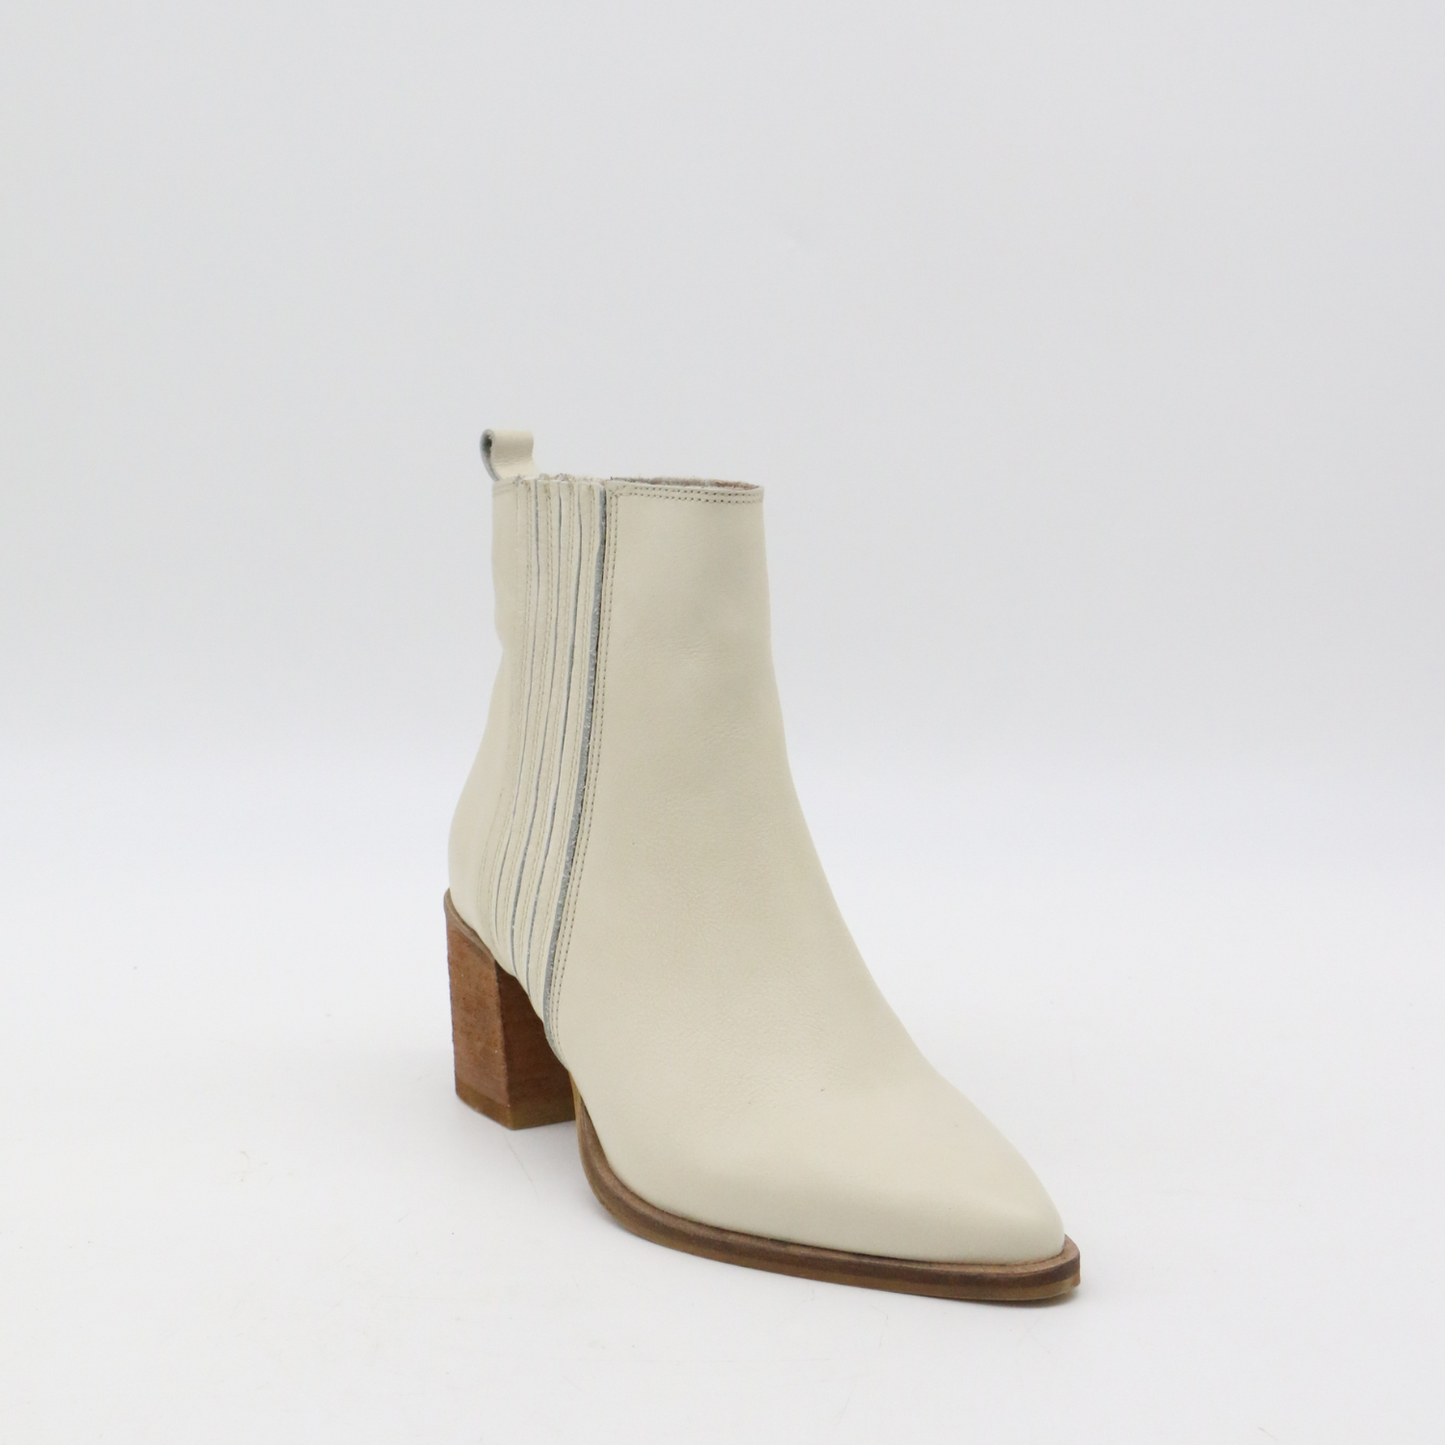 Stivali Boots - Premium  from Marina St Barth - Just $210! Shop now at Marina St Barth